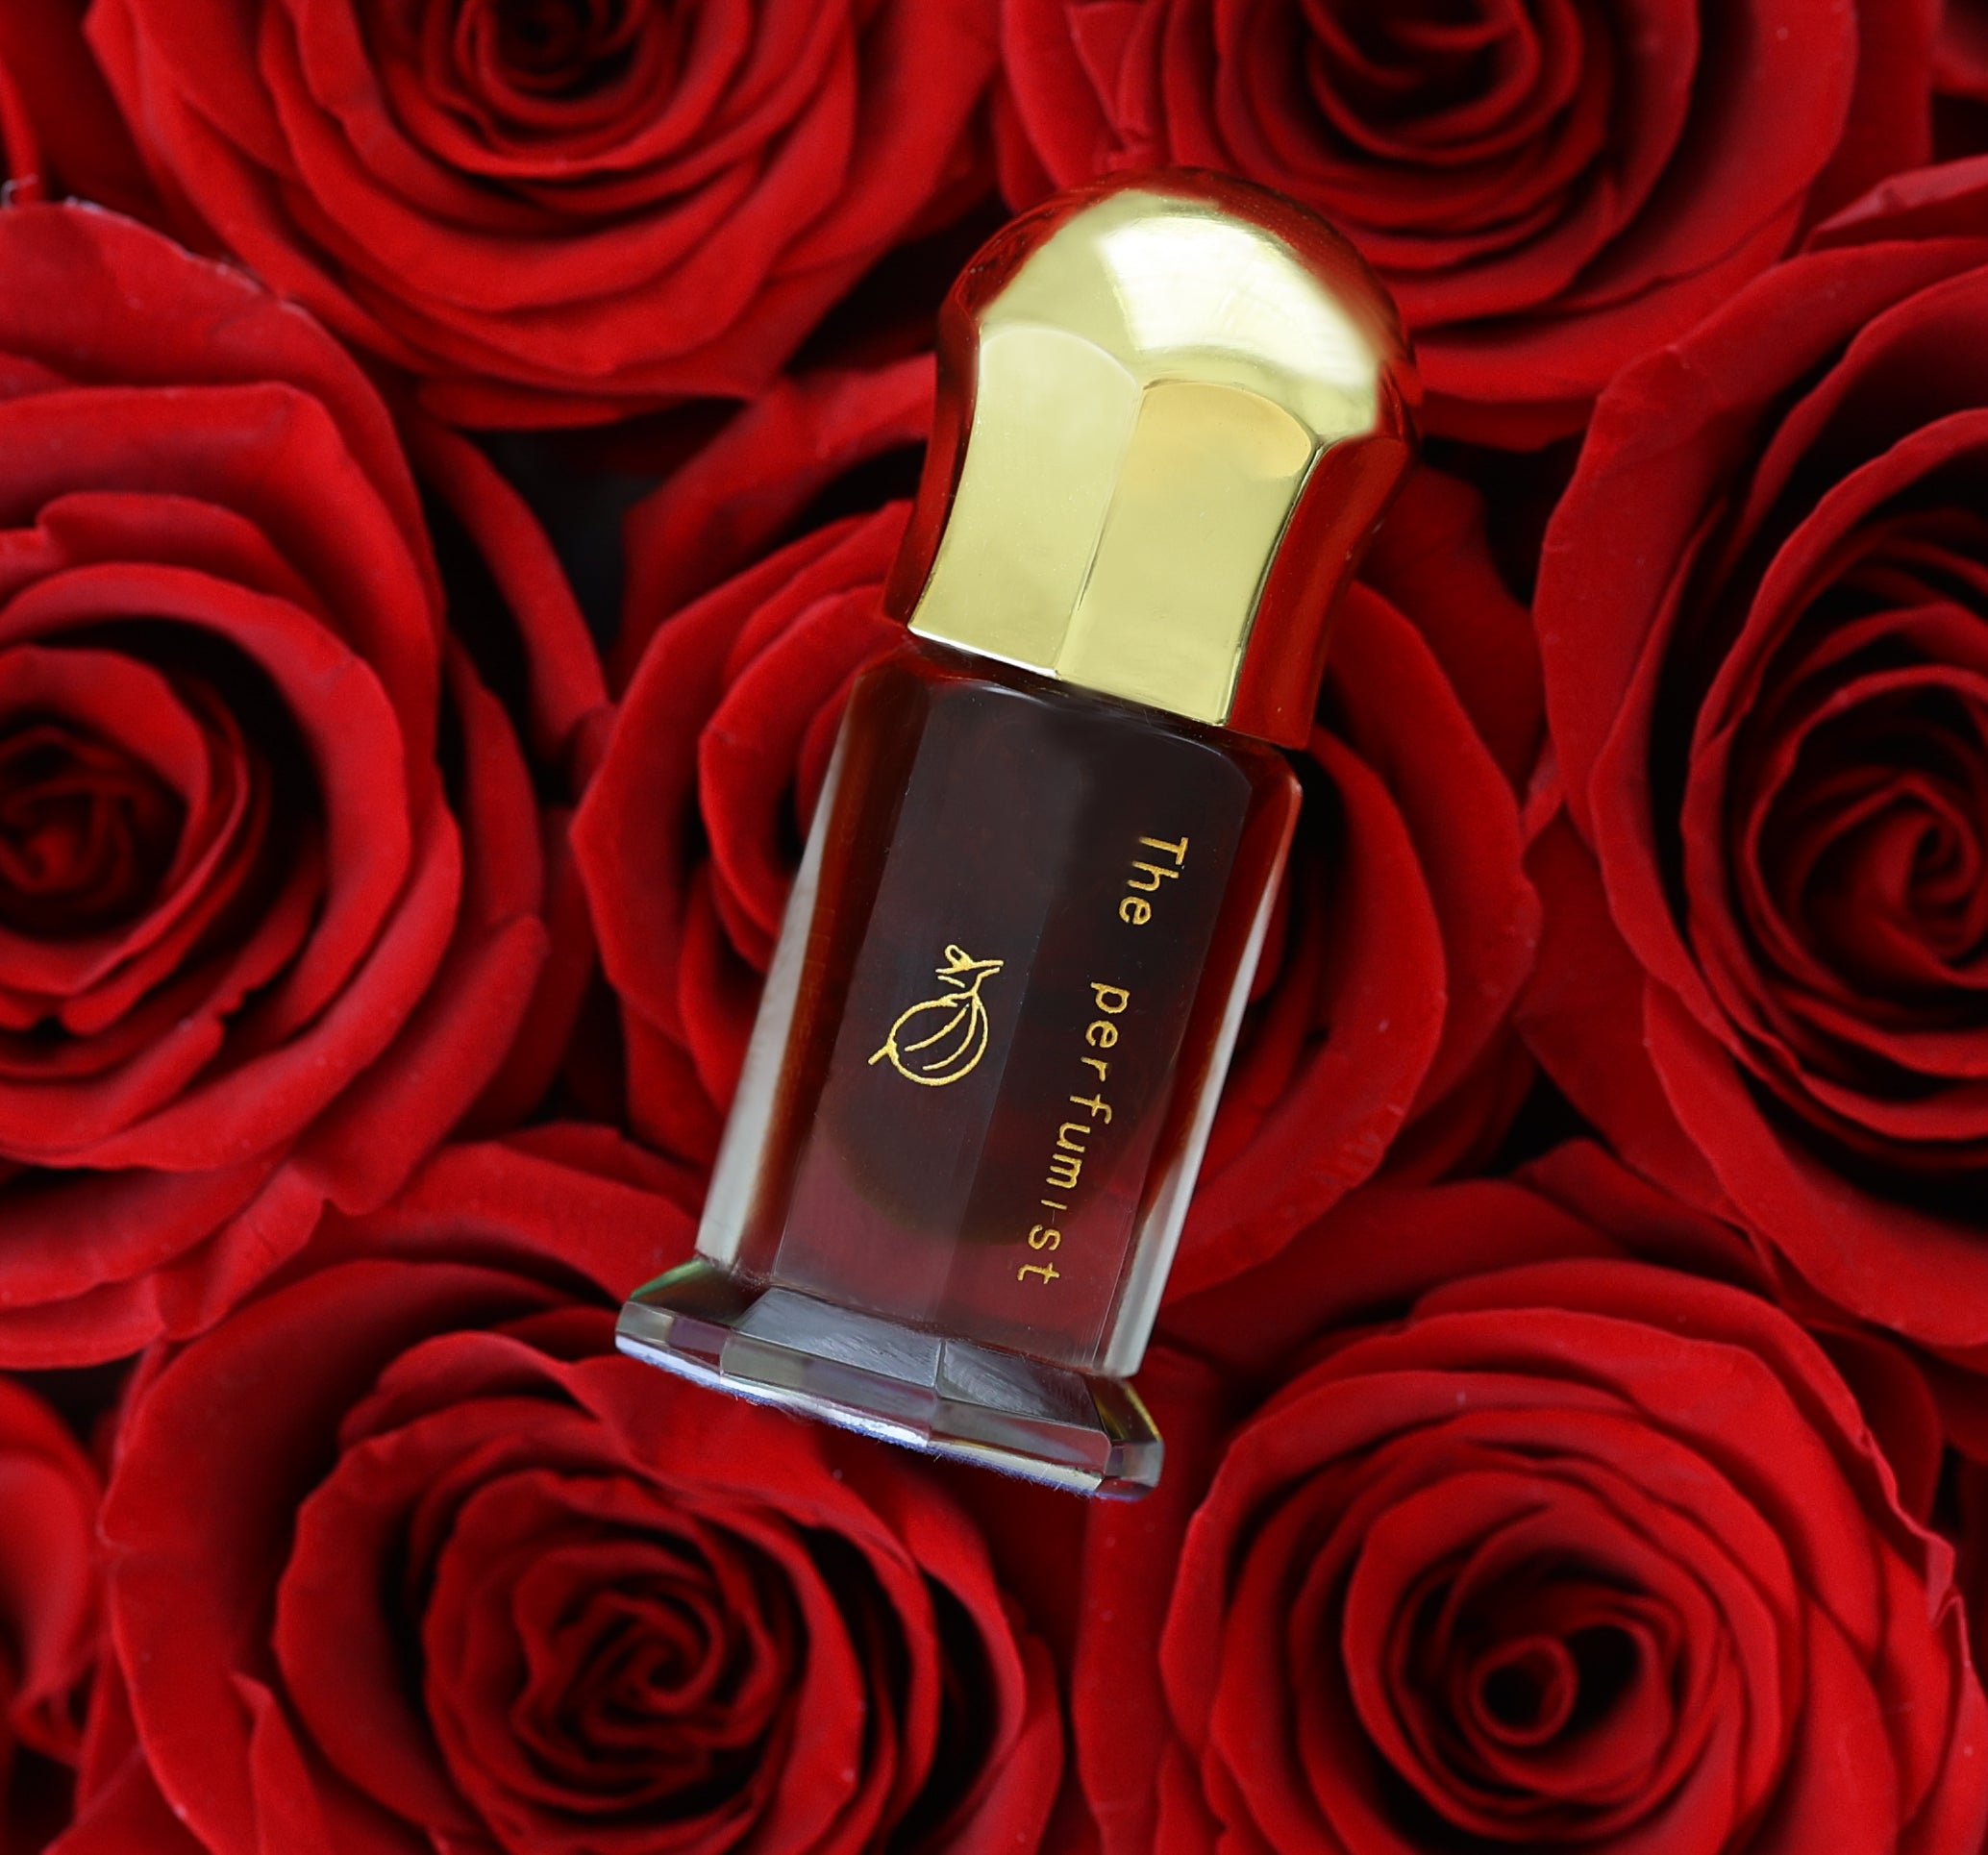 Huyam - The love elixir / valentine special batch attar